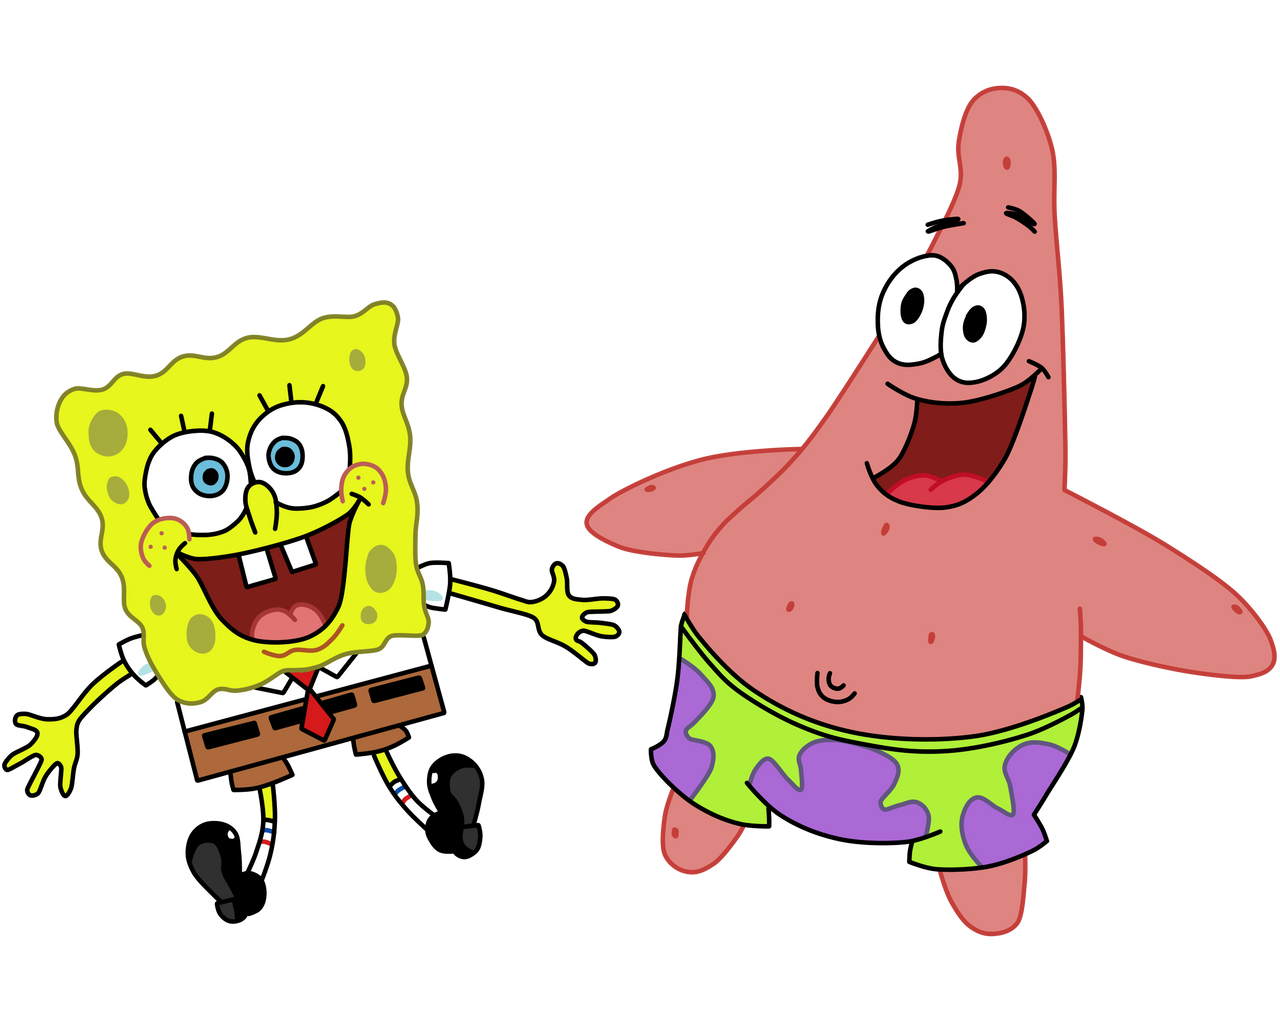 SpongeBob and Patrick by jcpag2010 on DeviantArt